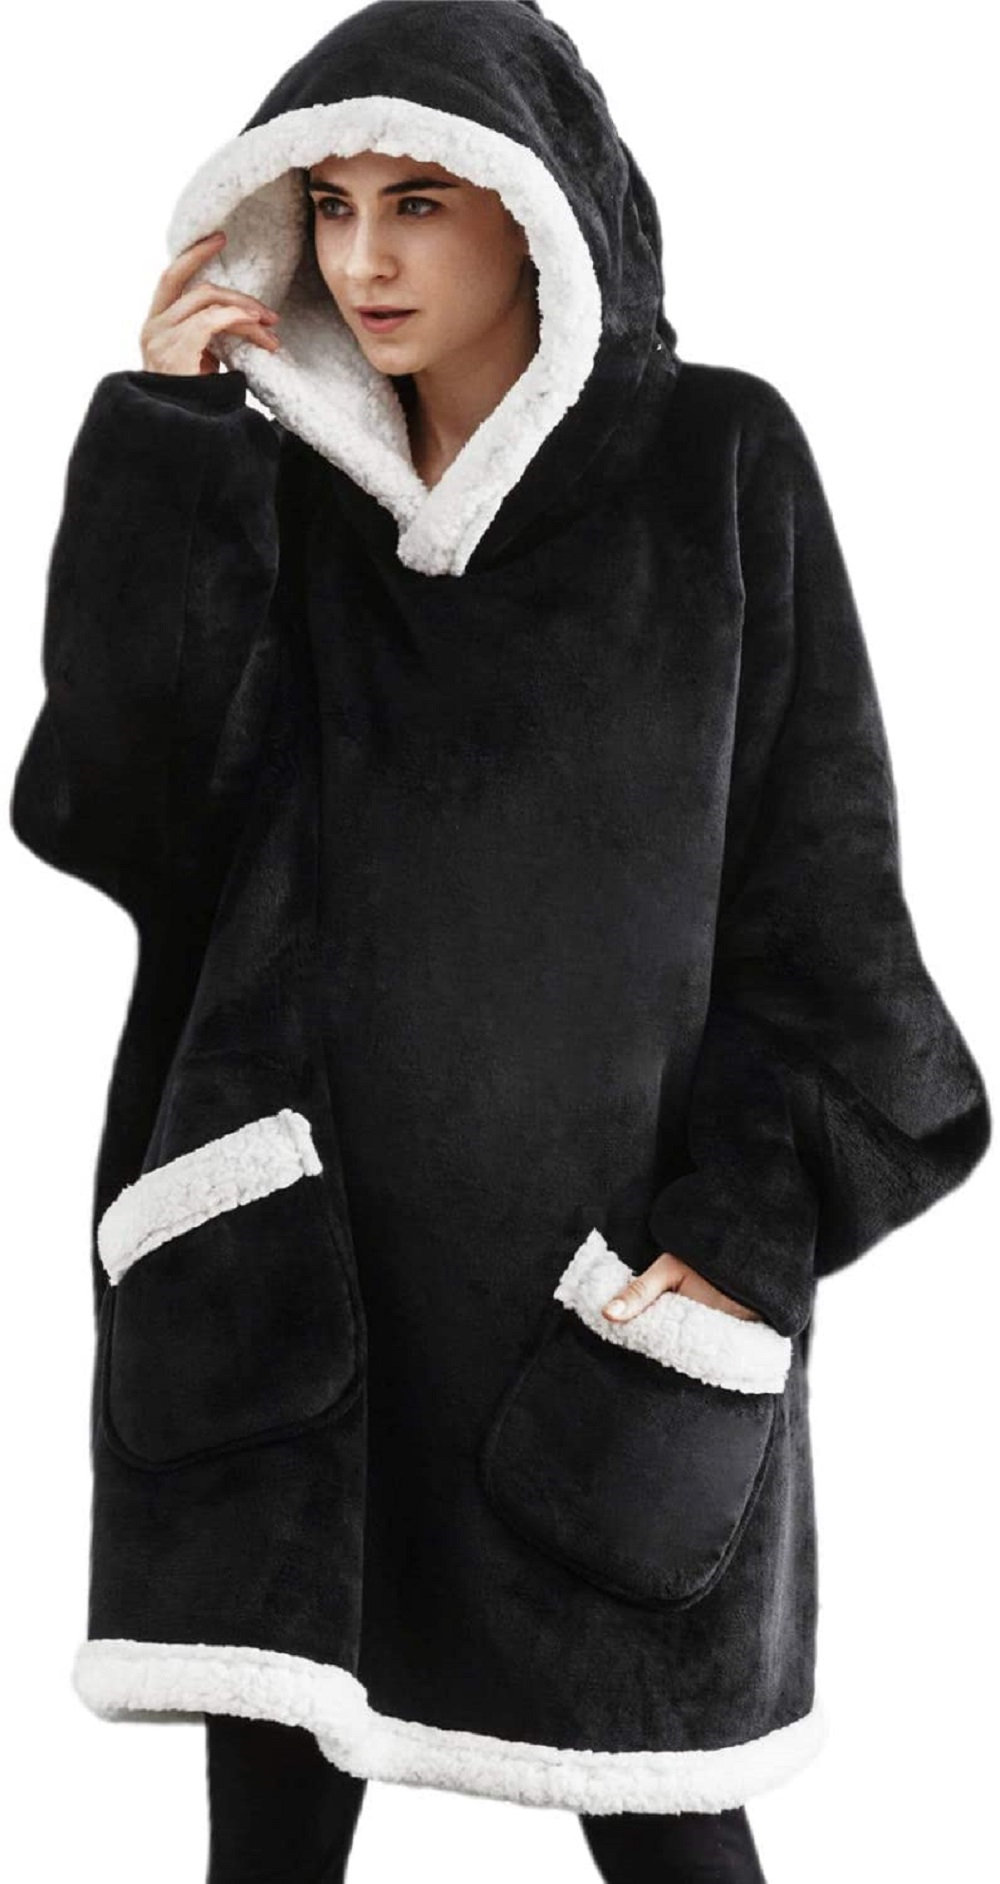 Oversize Hoodie Big Wearable Warm Blanket Sweatshirt Gift for Women and Men，Plush Fluffy Sherpa Fleece with Sleeves and Giant Pocket 